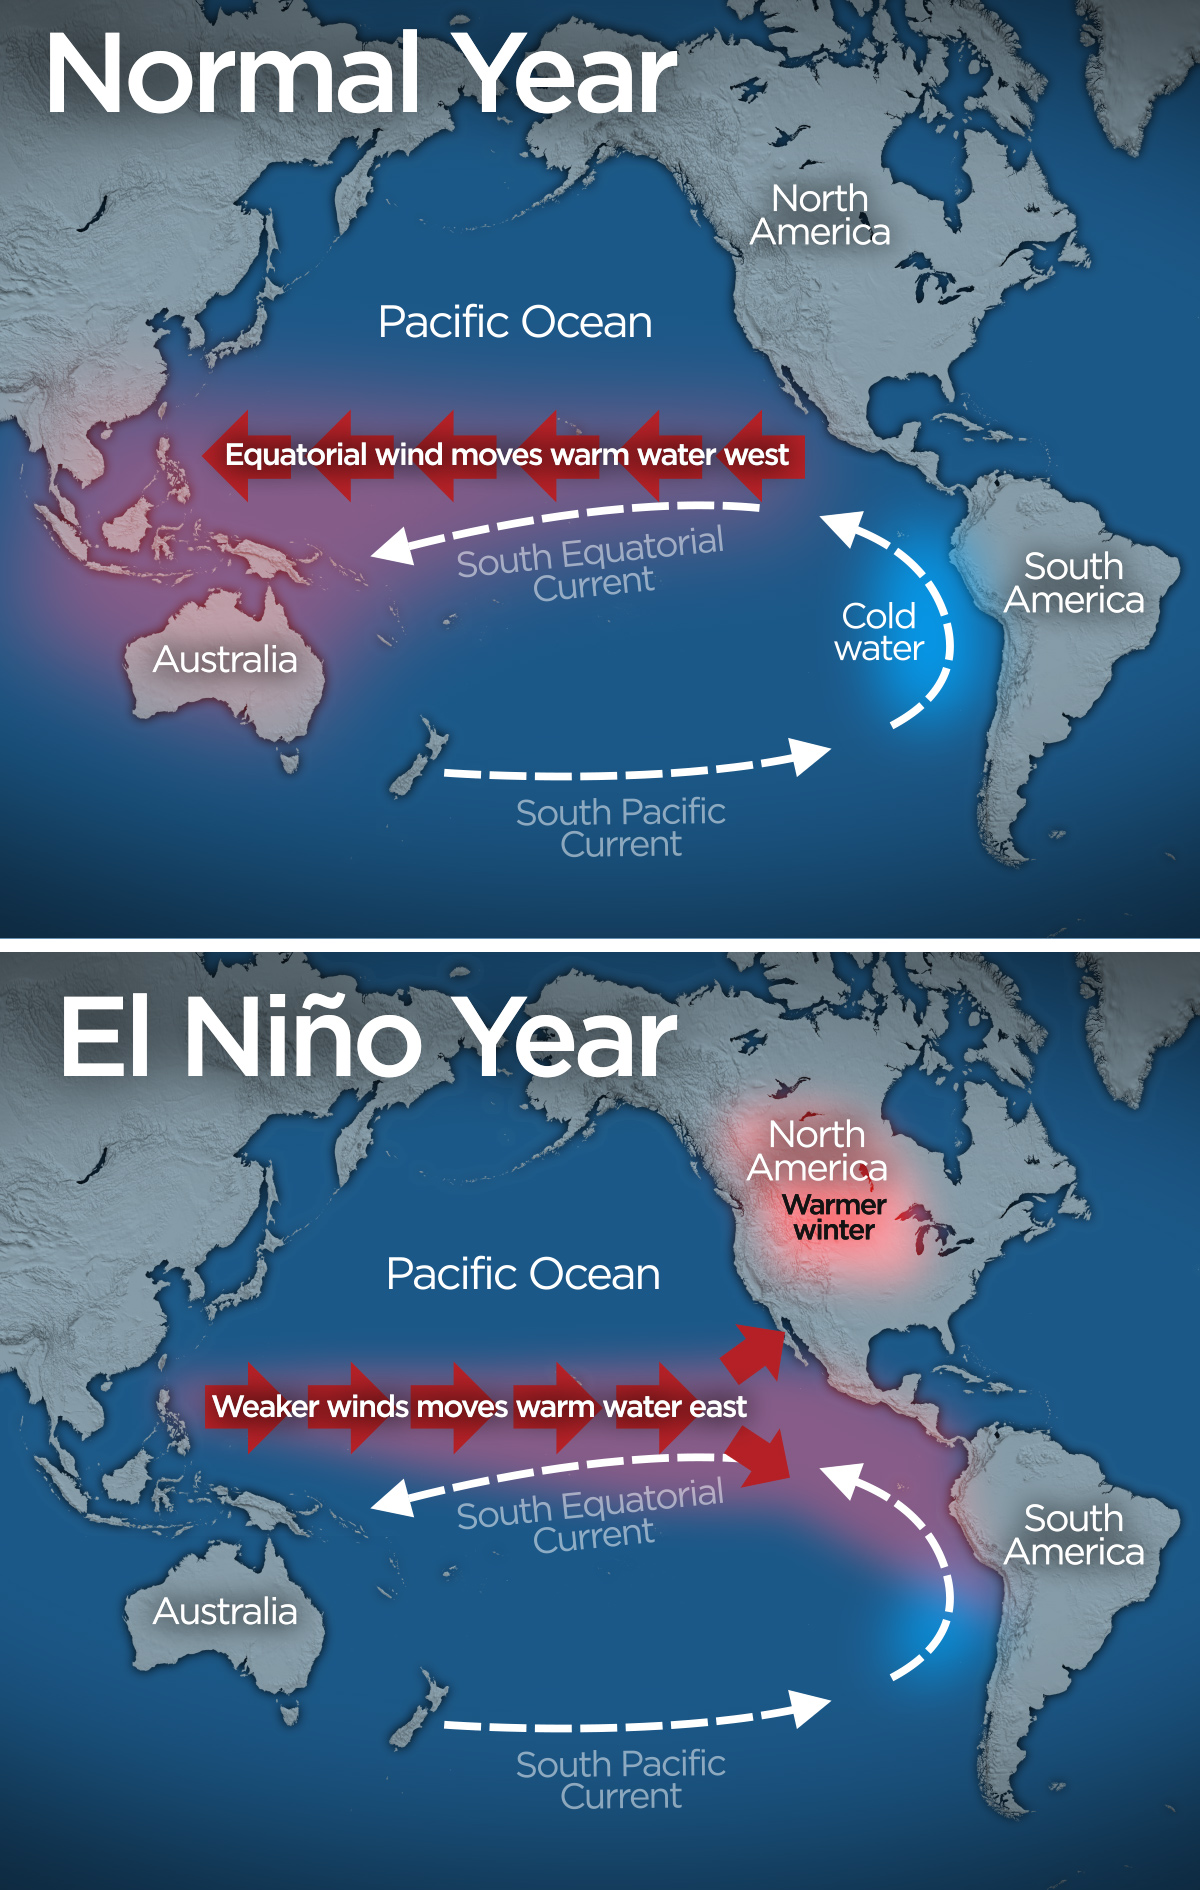 El Niño event will lead to coastal flooding and erosion of B.C.’s coast